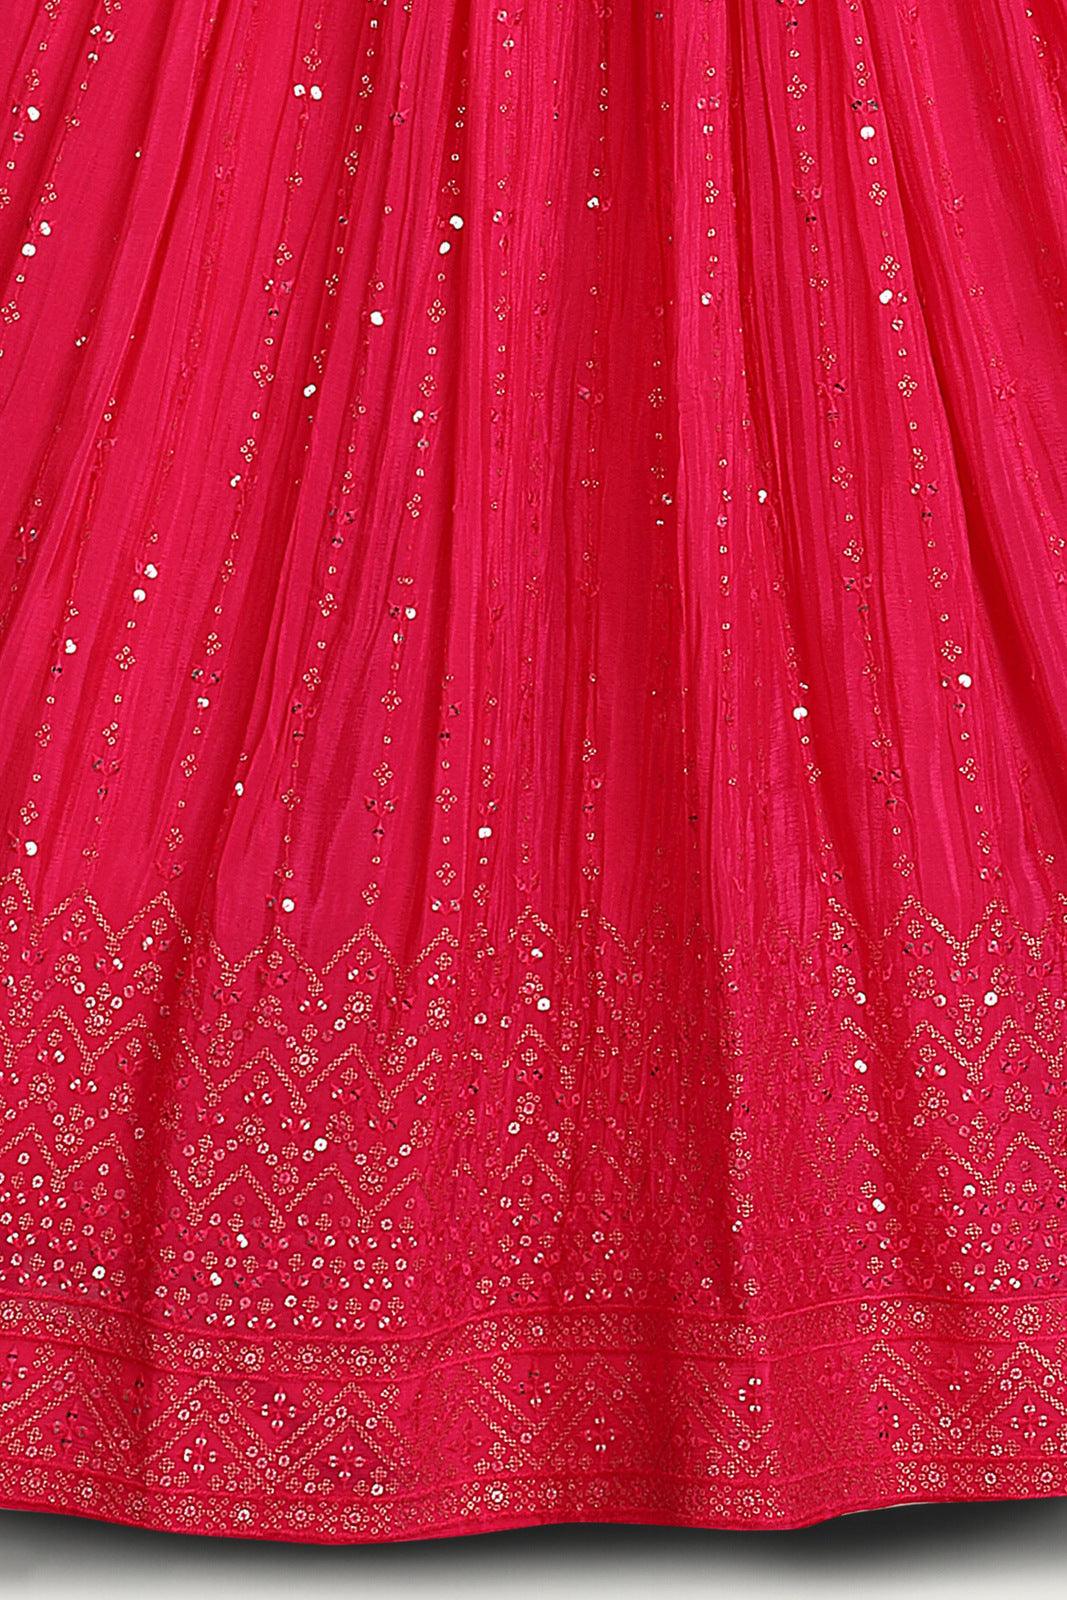 Rani Pink Beads, Zardozi, Mirror and Sequins work Crop Top Lehenga - Seasons Chennai